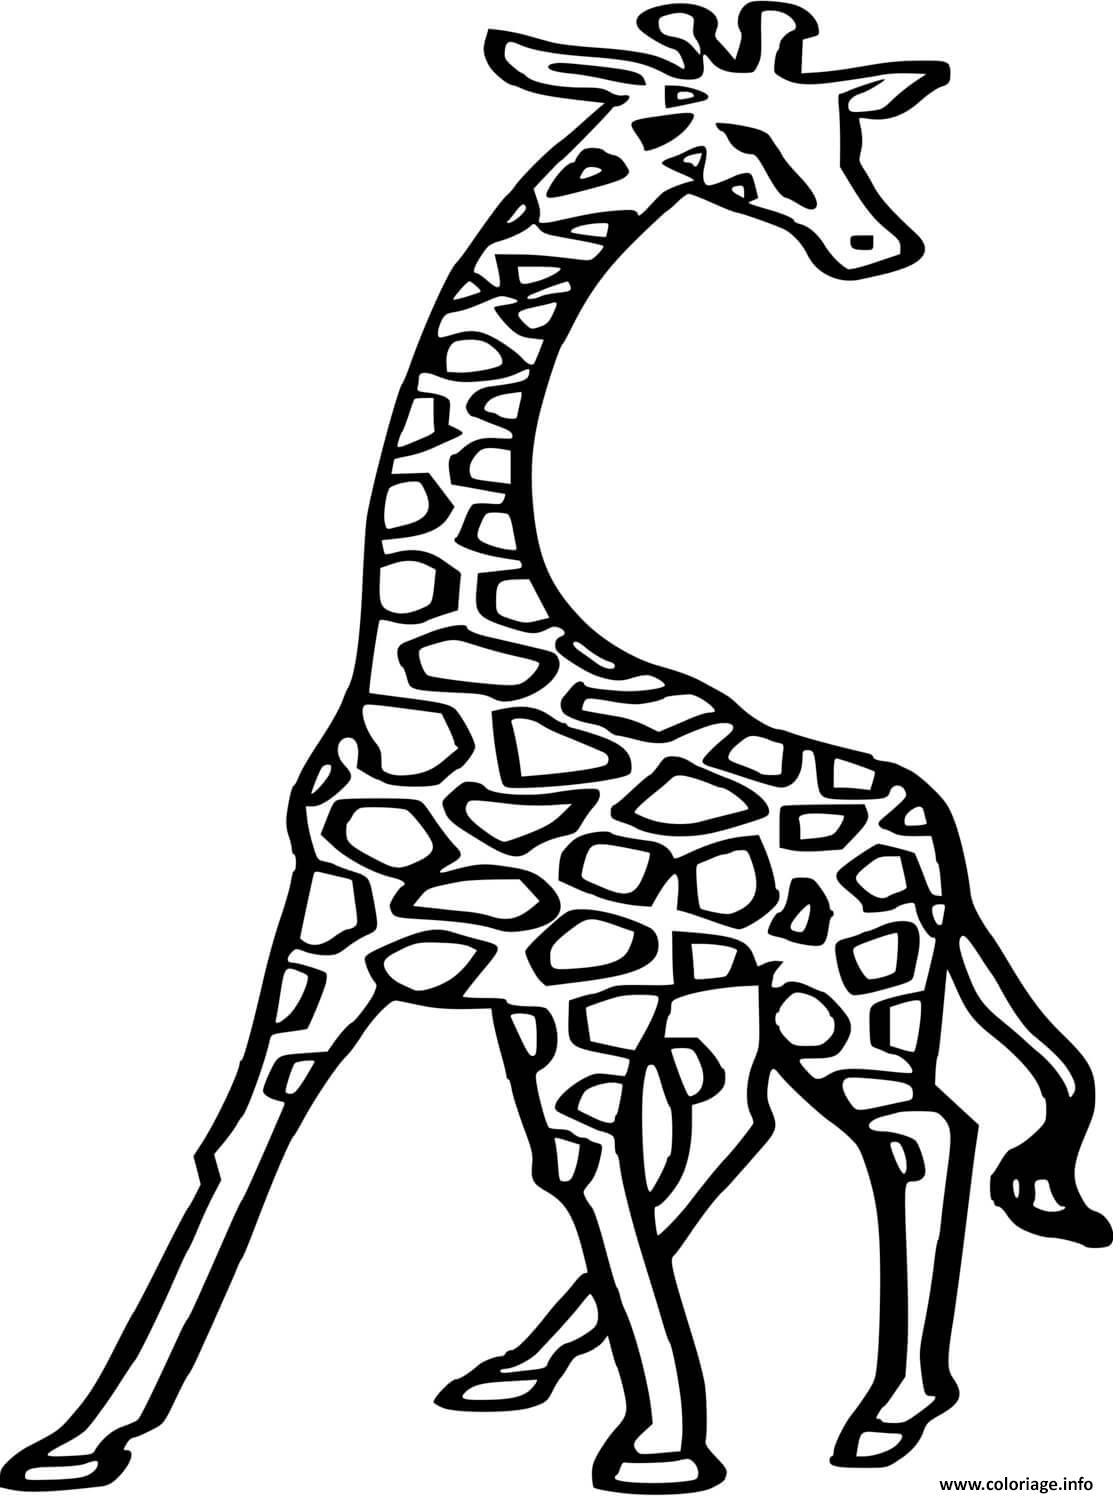 Coloriage Une Girafe Dessin à Imprimer